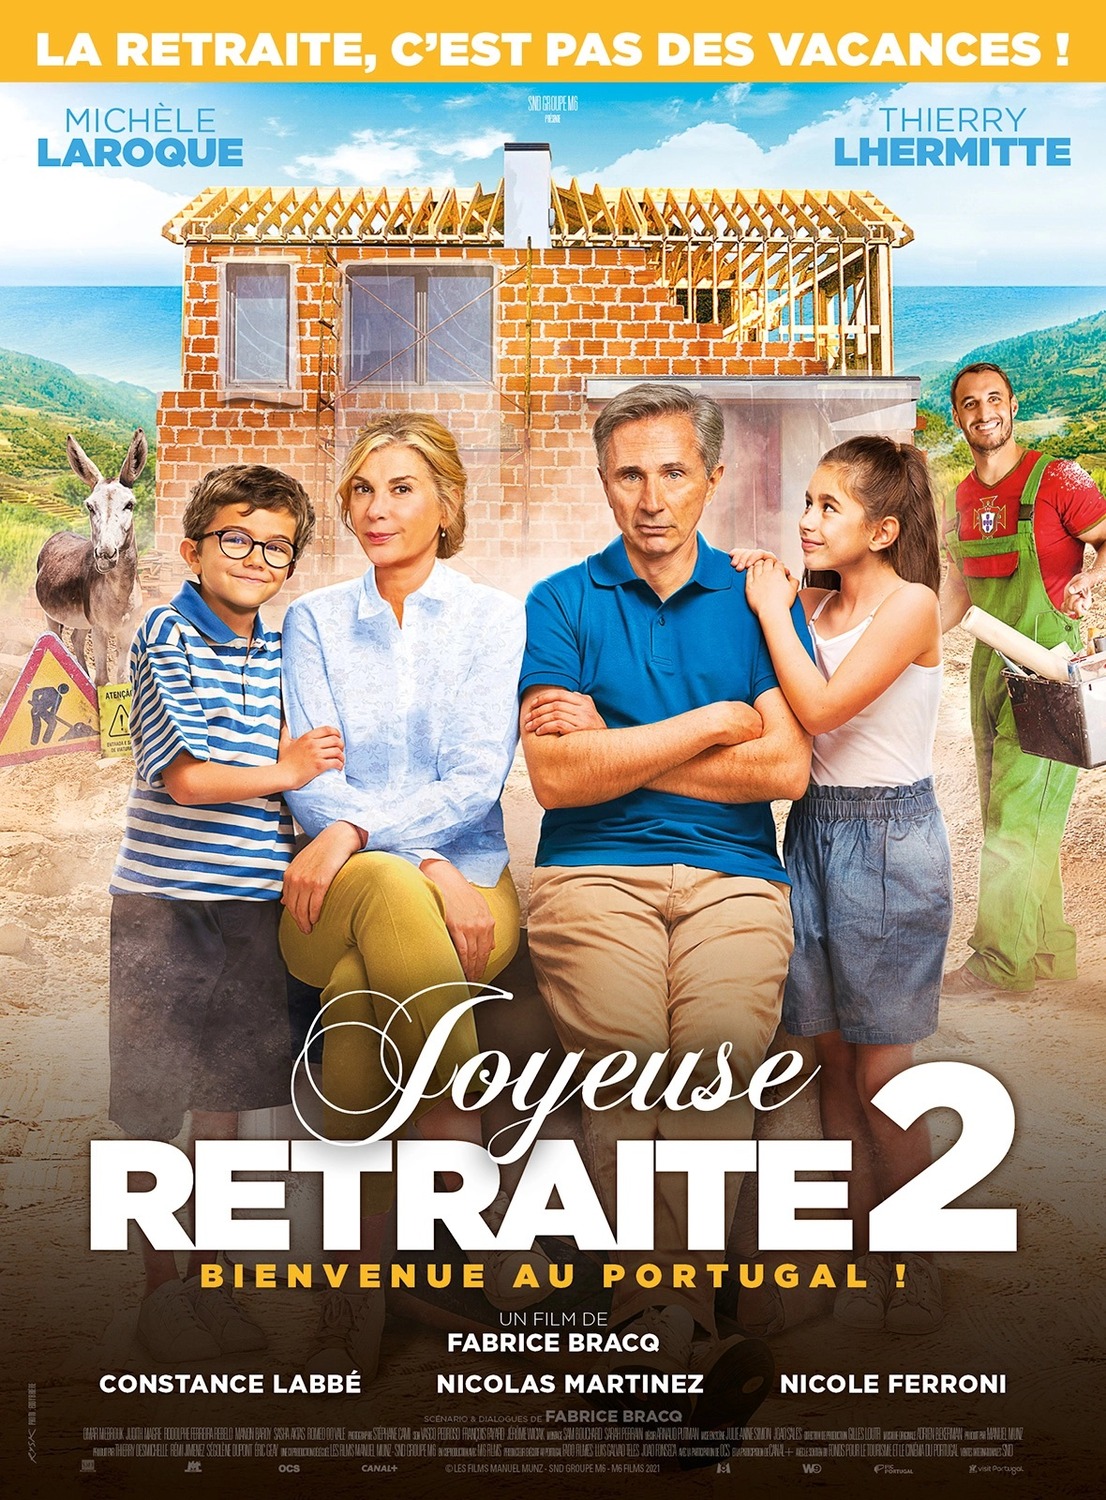 Extra Large Movie Poster Image for Joyeuse retraite! 2 